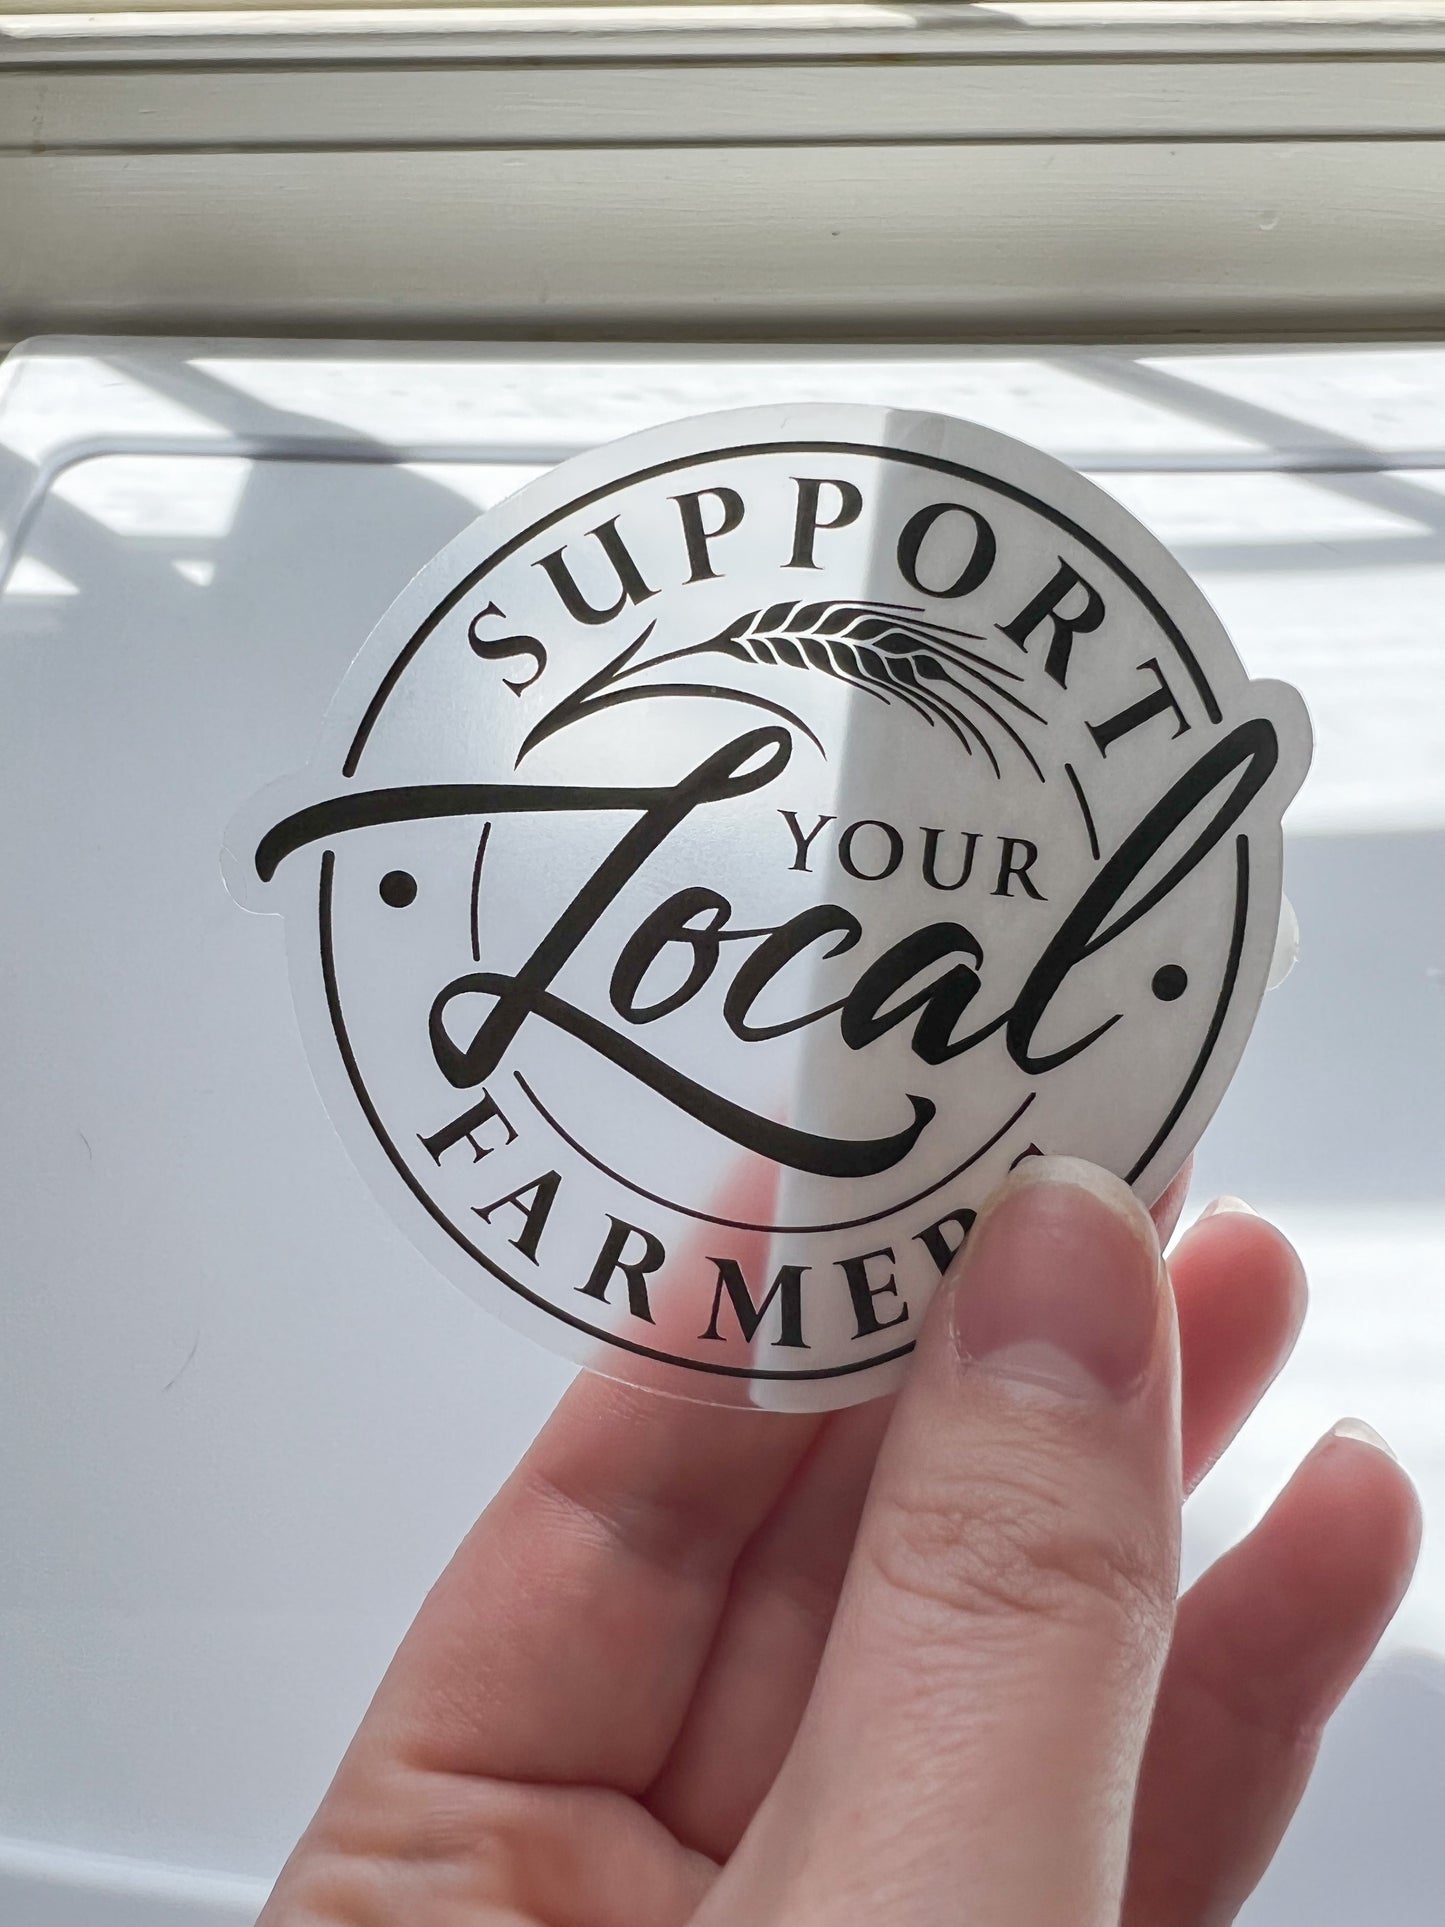 Support Local Farmers Sticker